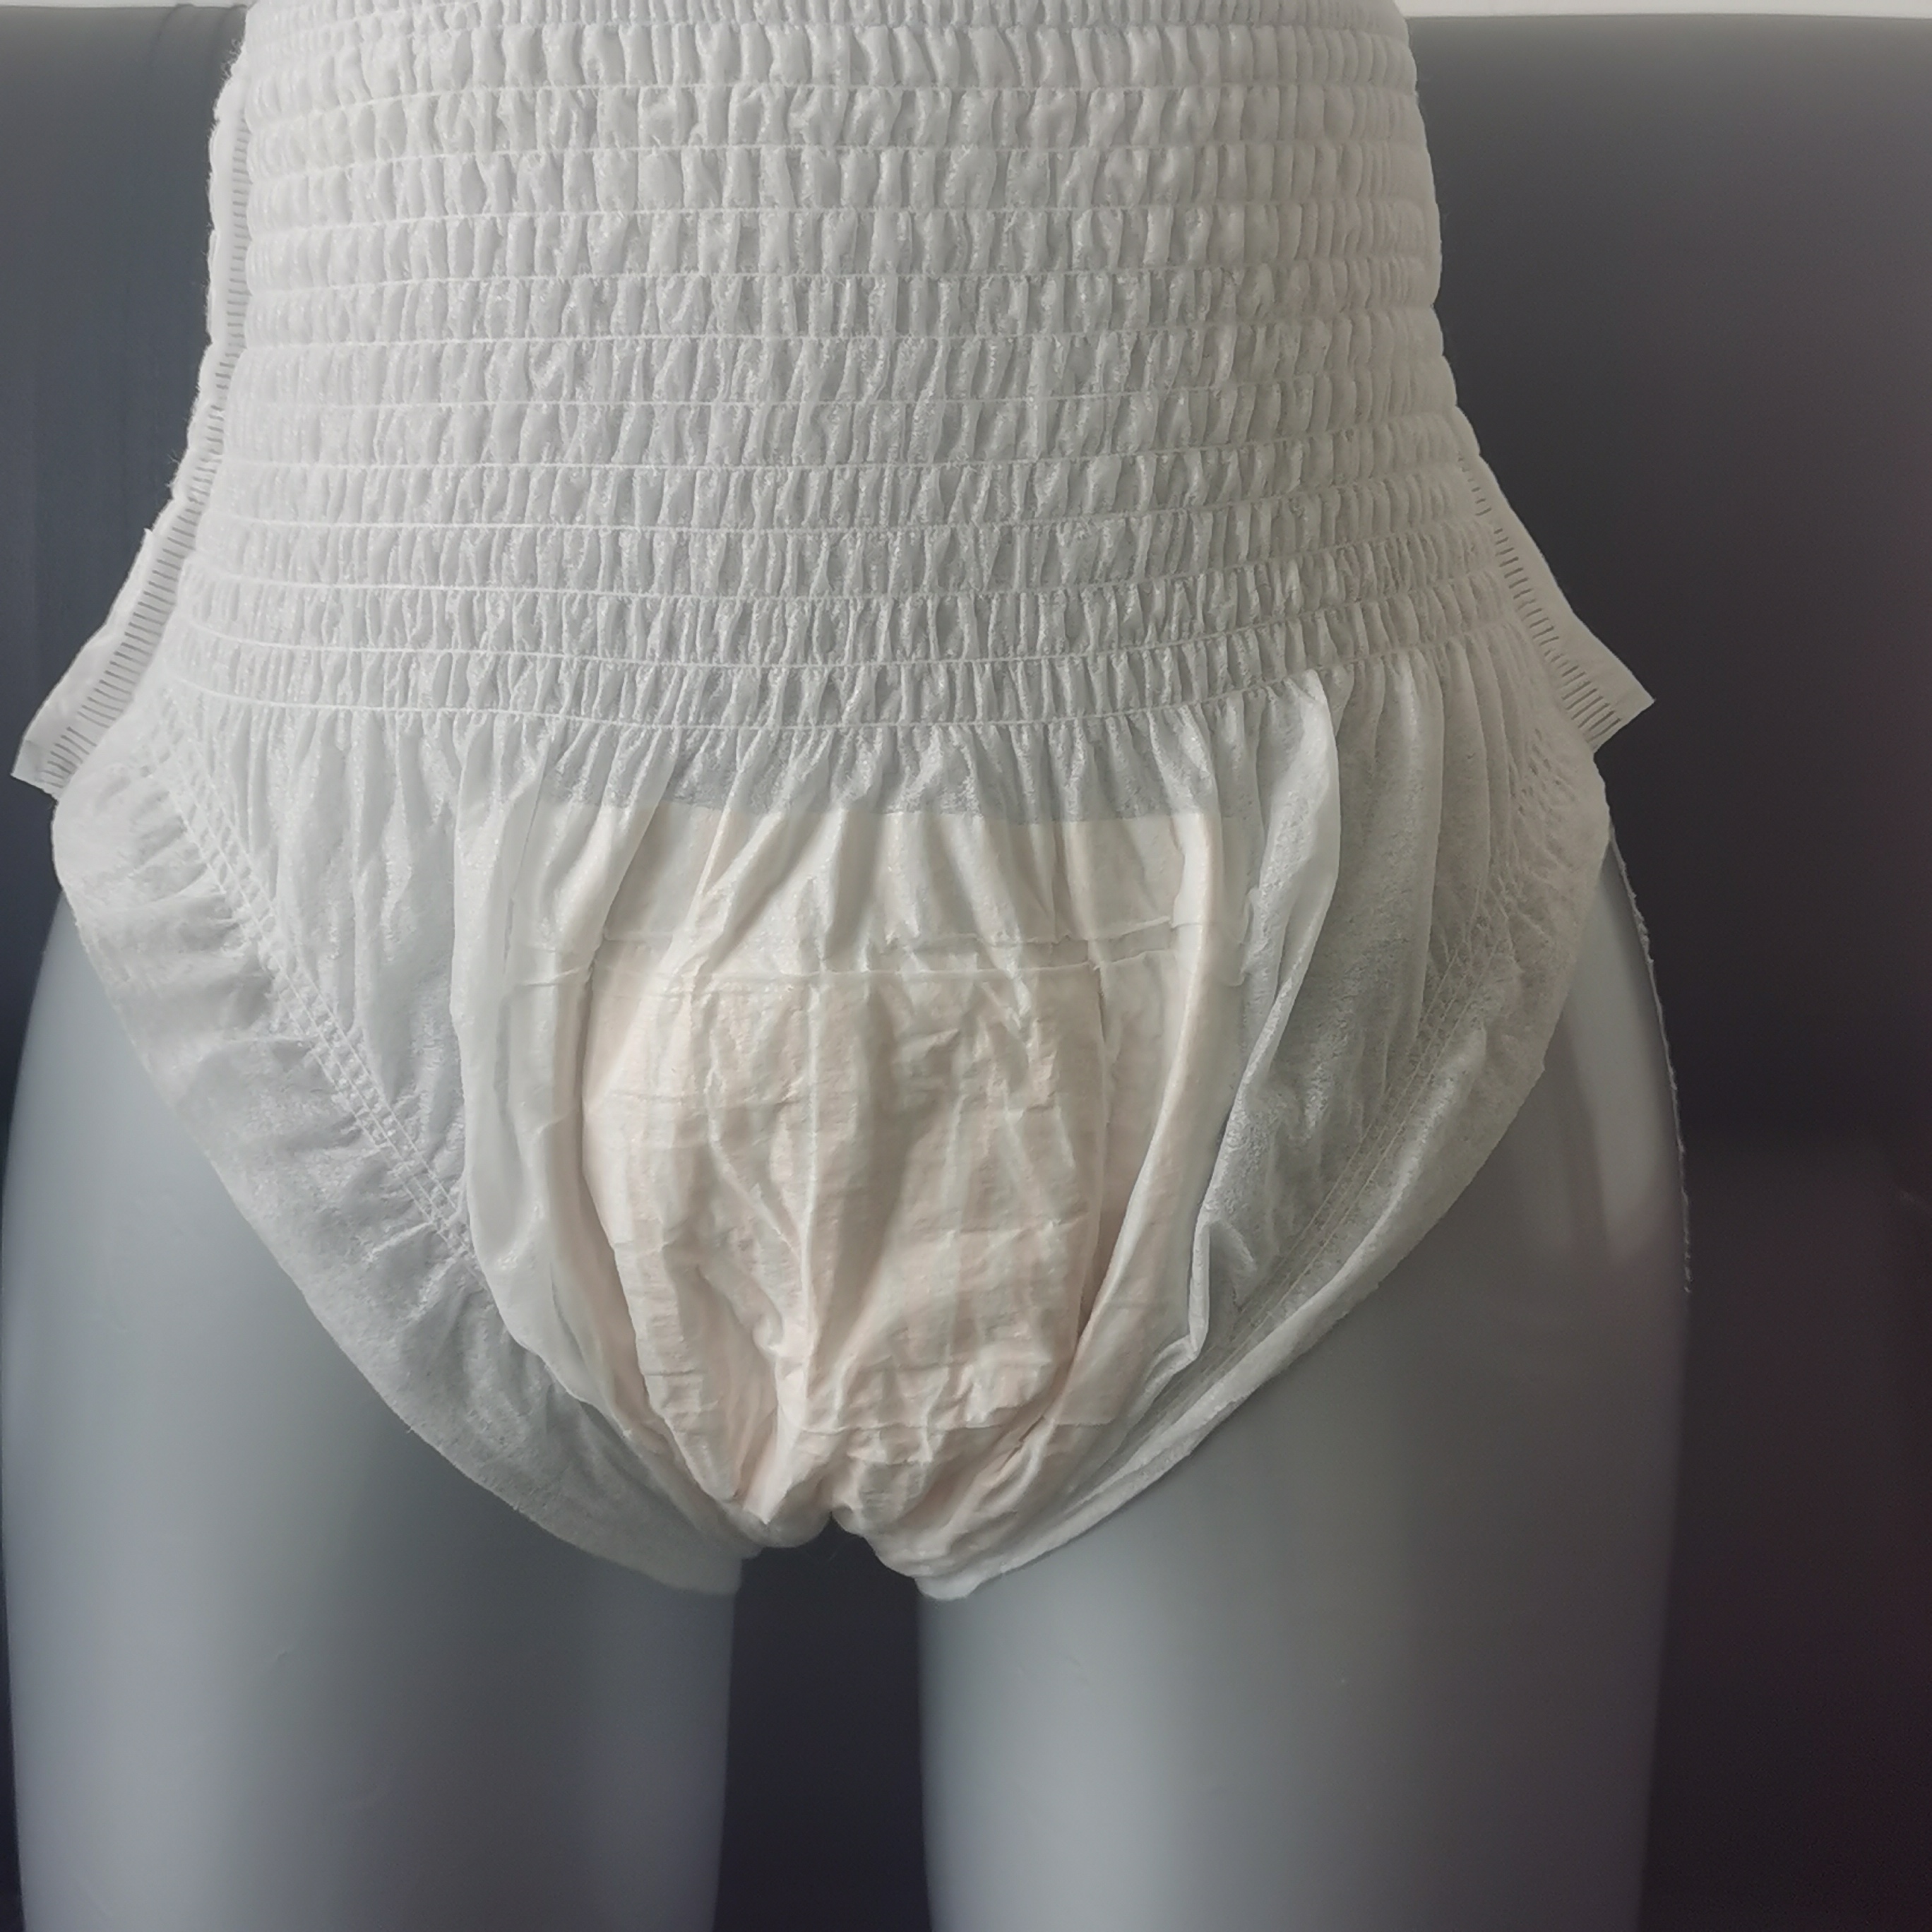 Pantalones de toallas sanitarias OEM/ODMS para pantalones de servilleta sanitaria de uso nocturno menstrual femenino